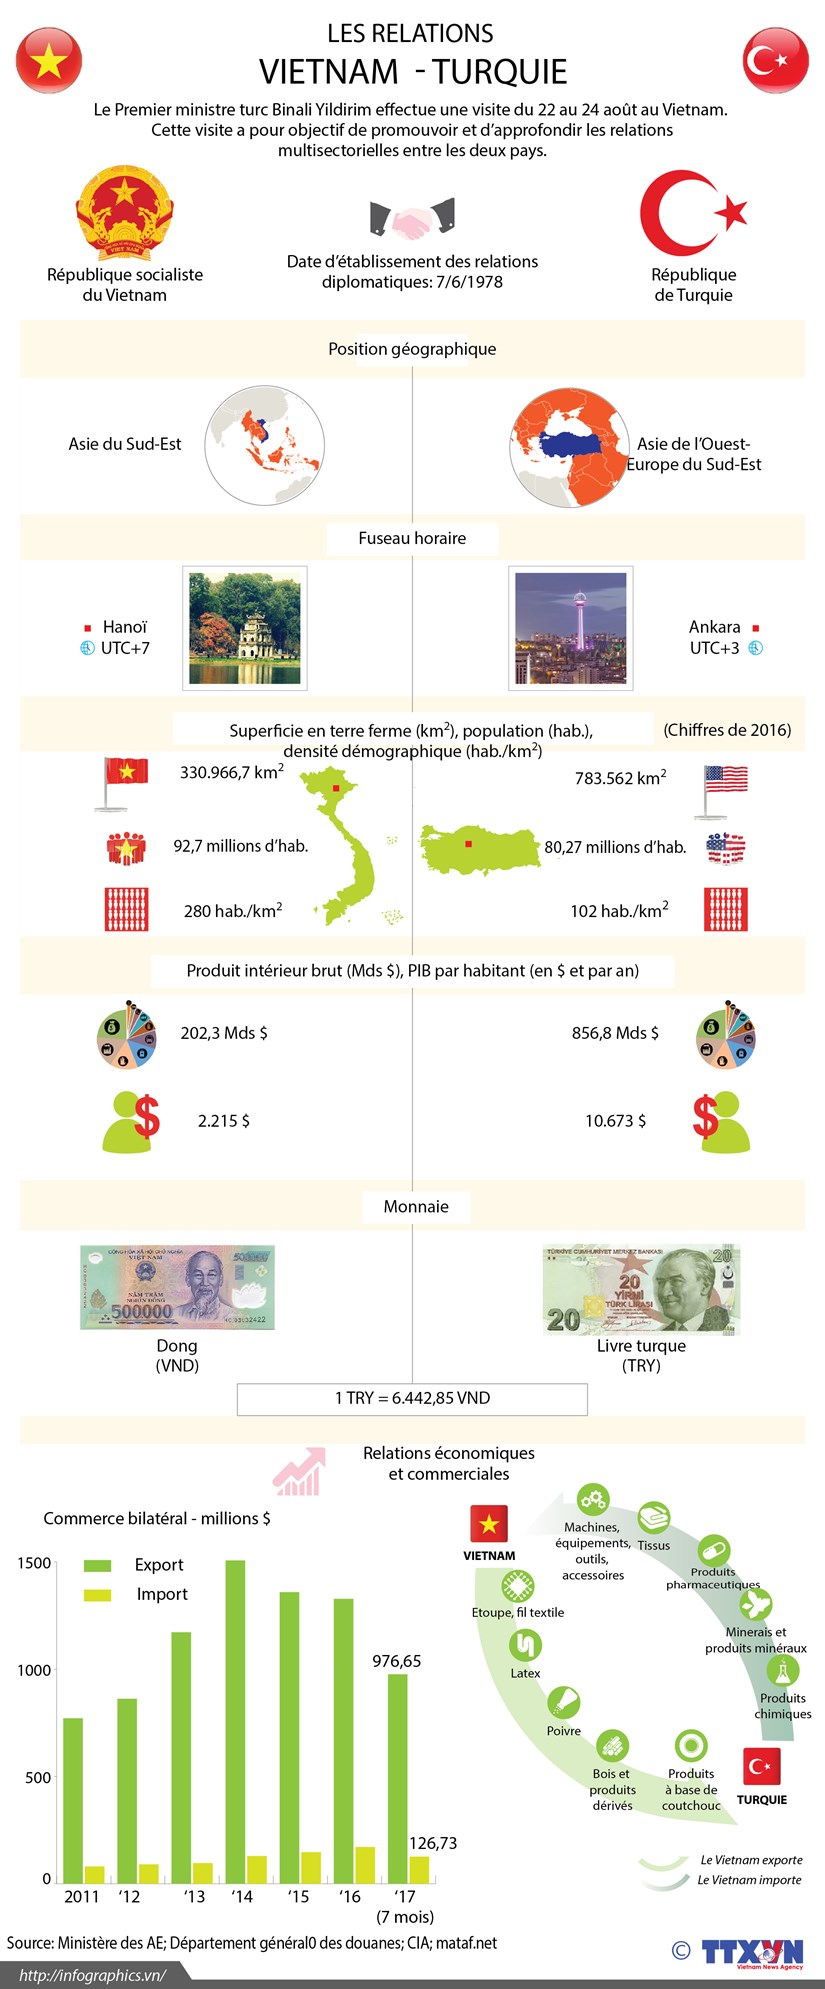 Les relations Vietnam - Turquie en infographie hinh anh 1